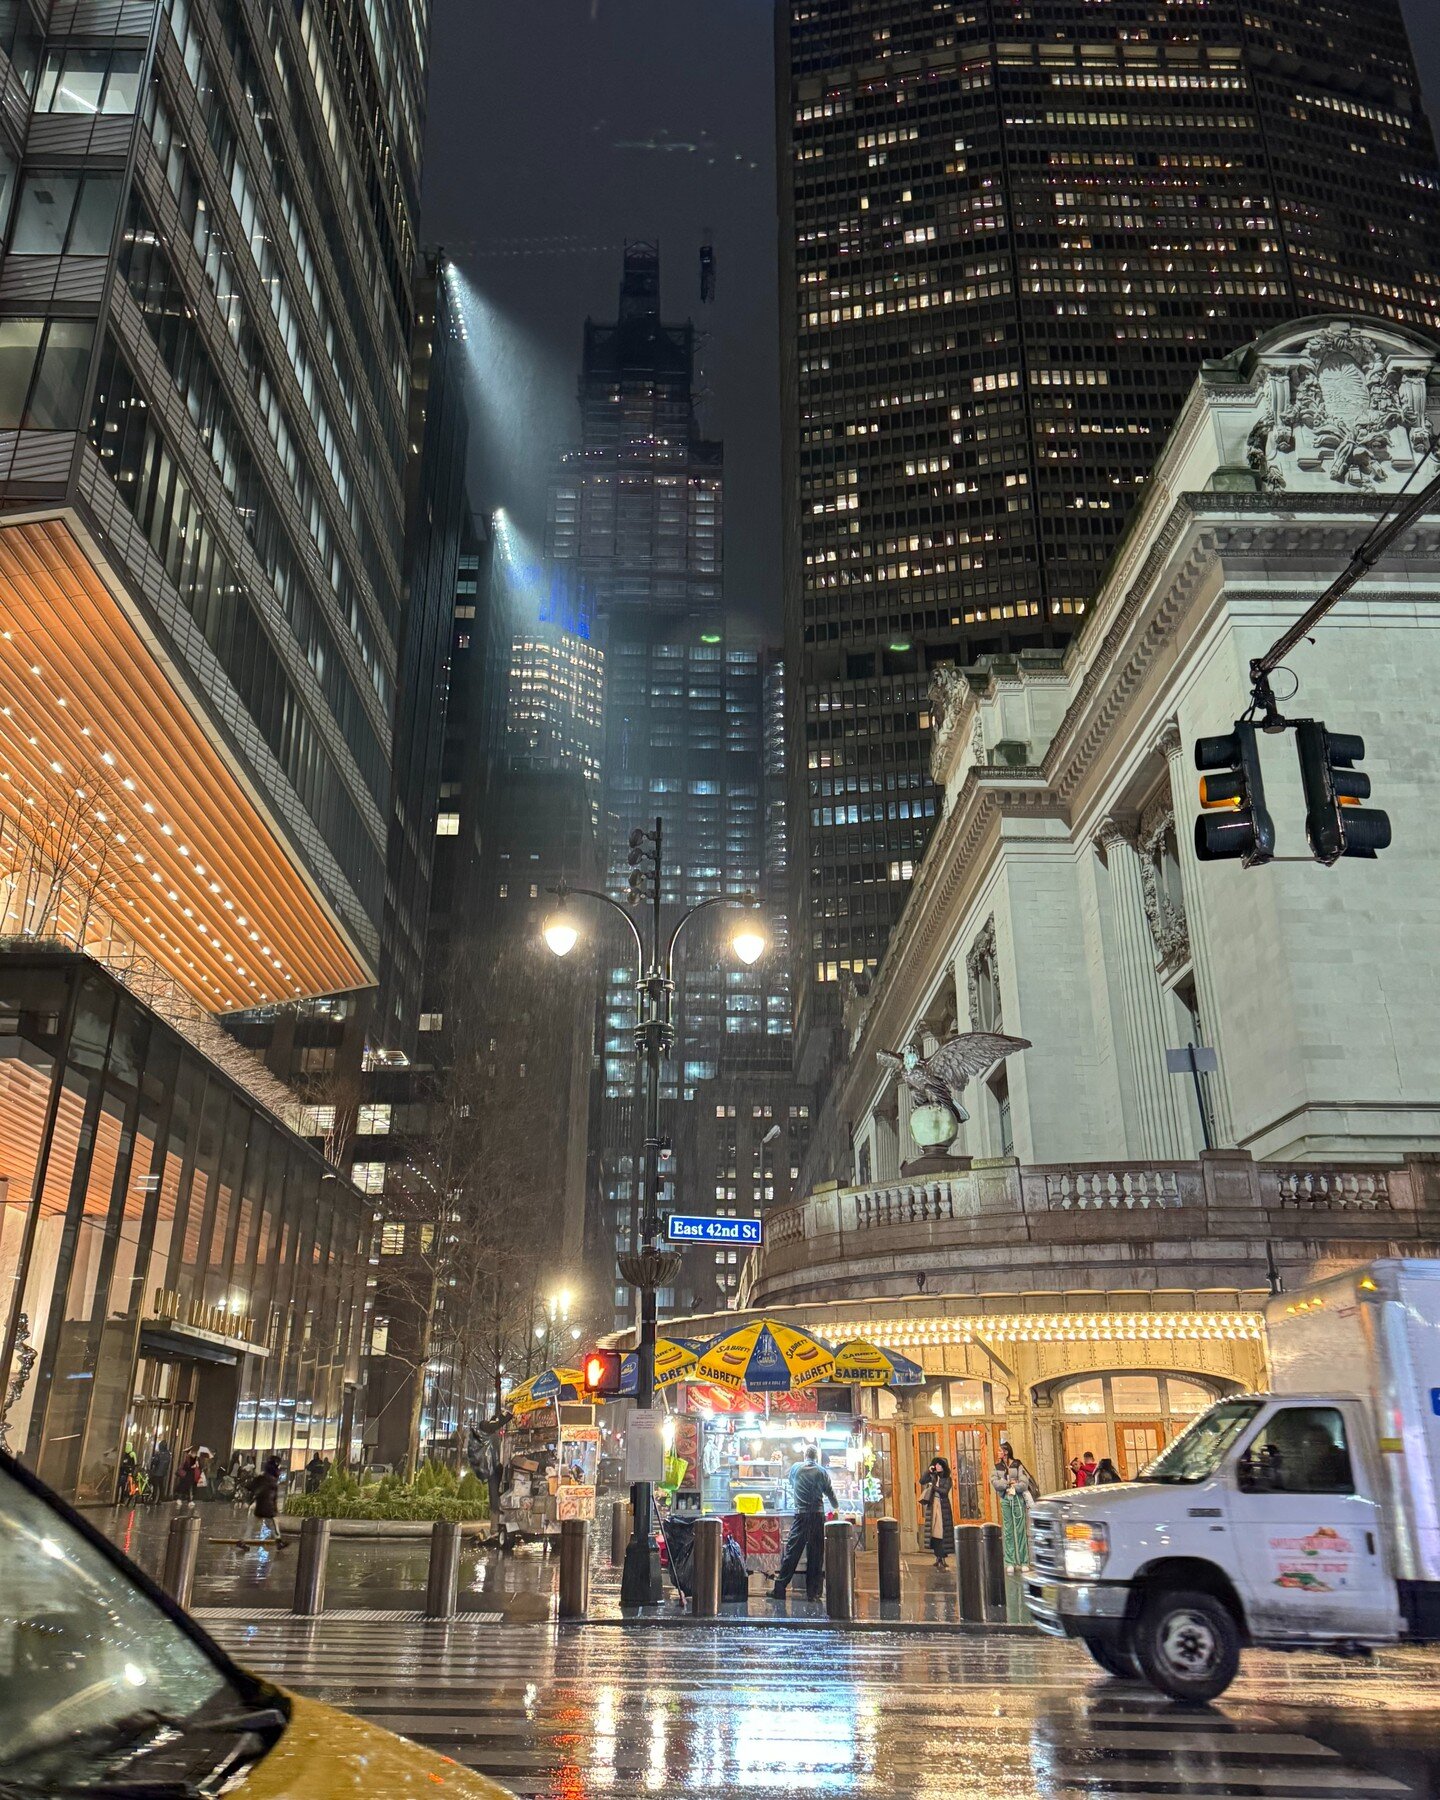 classic rainy night in #NYC

#newyork #newyorkcitylife 
#newyorkcityphotography 
#grandcentralterminal 
#rain #classicphotography 
#skyscraper #trains #streetfood